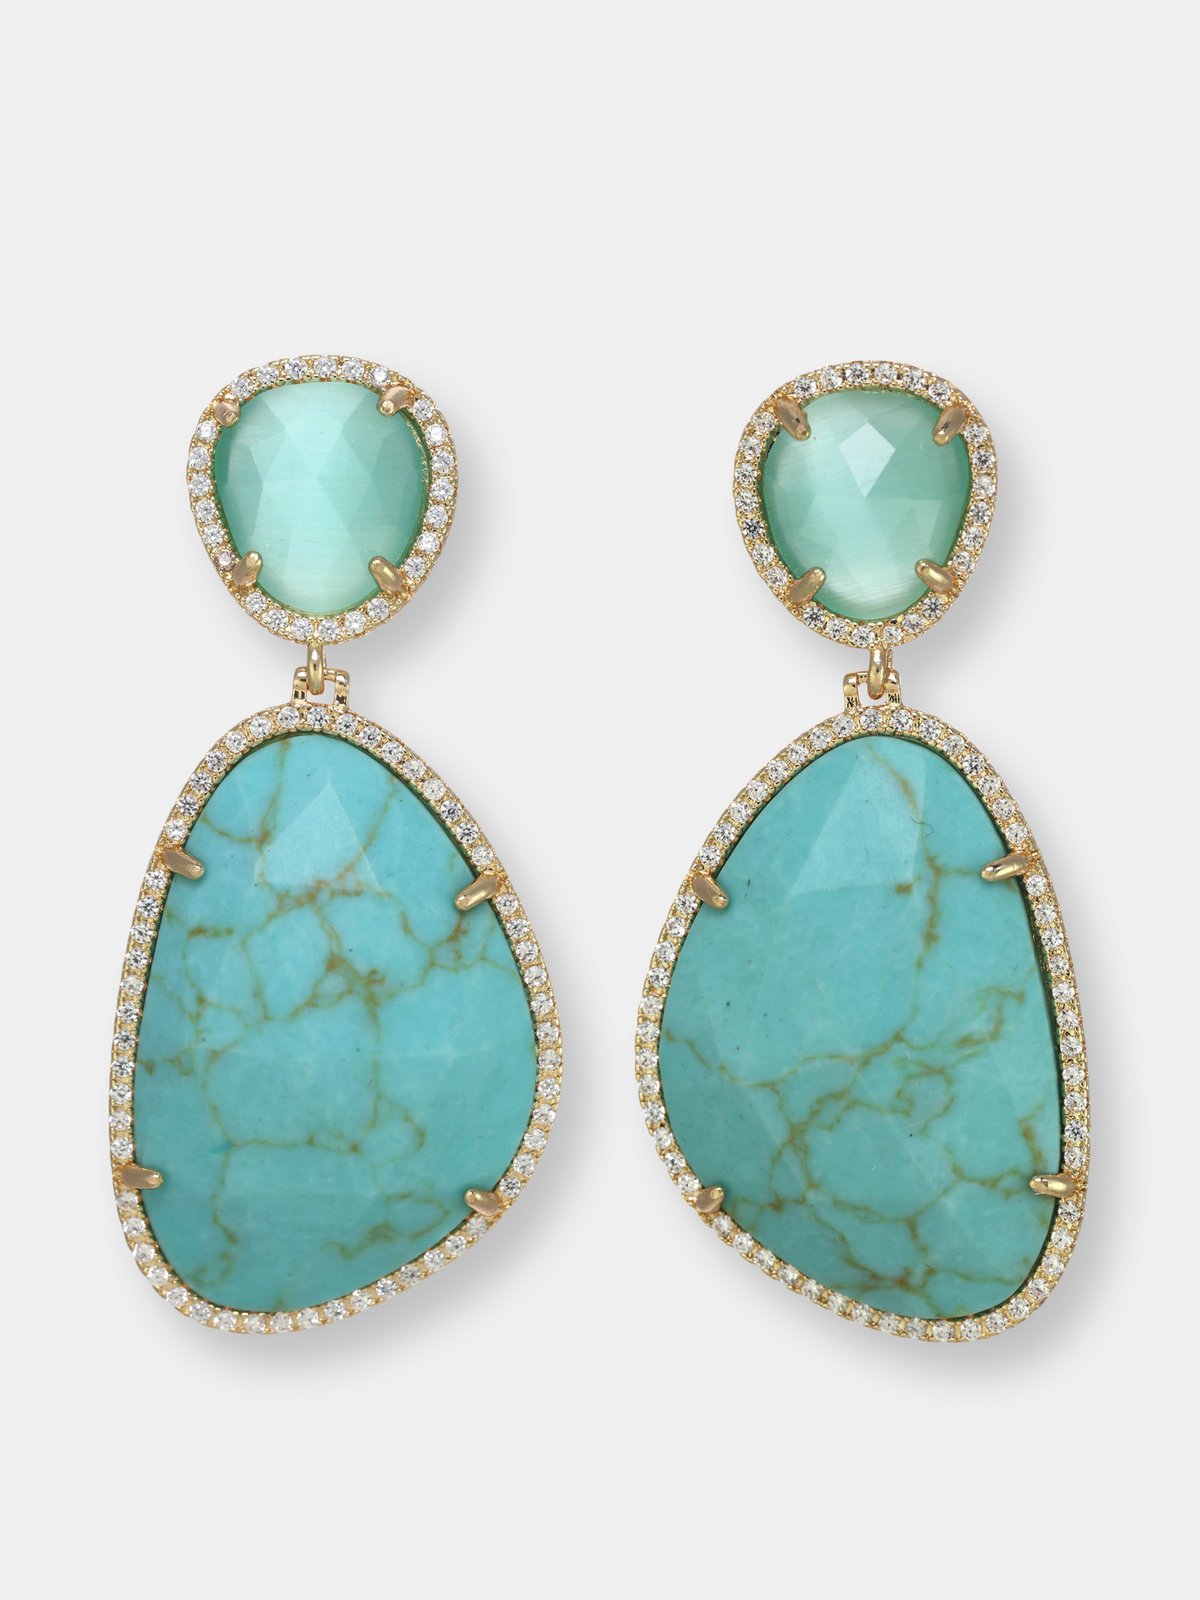 Natural stone earrings